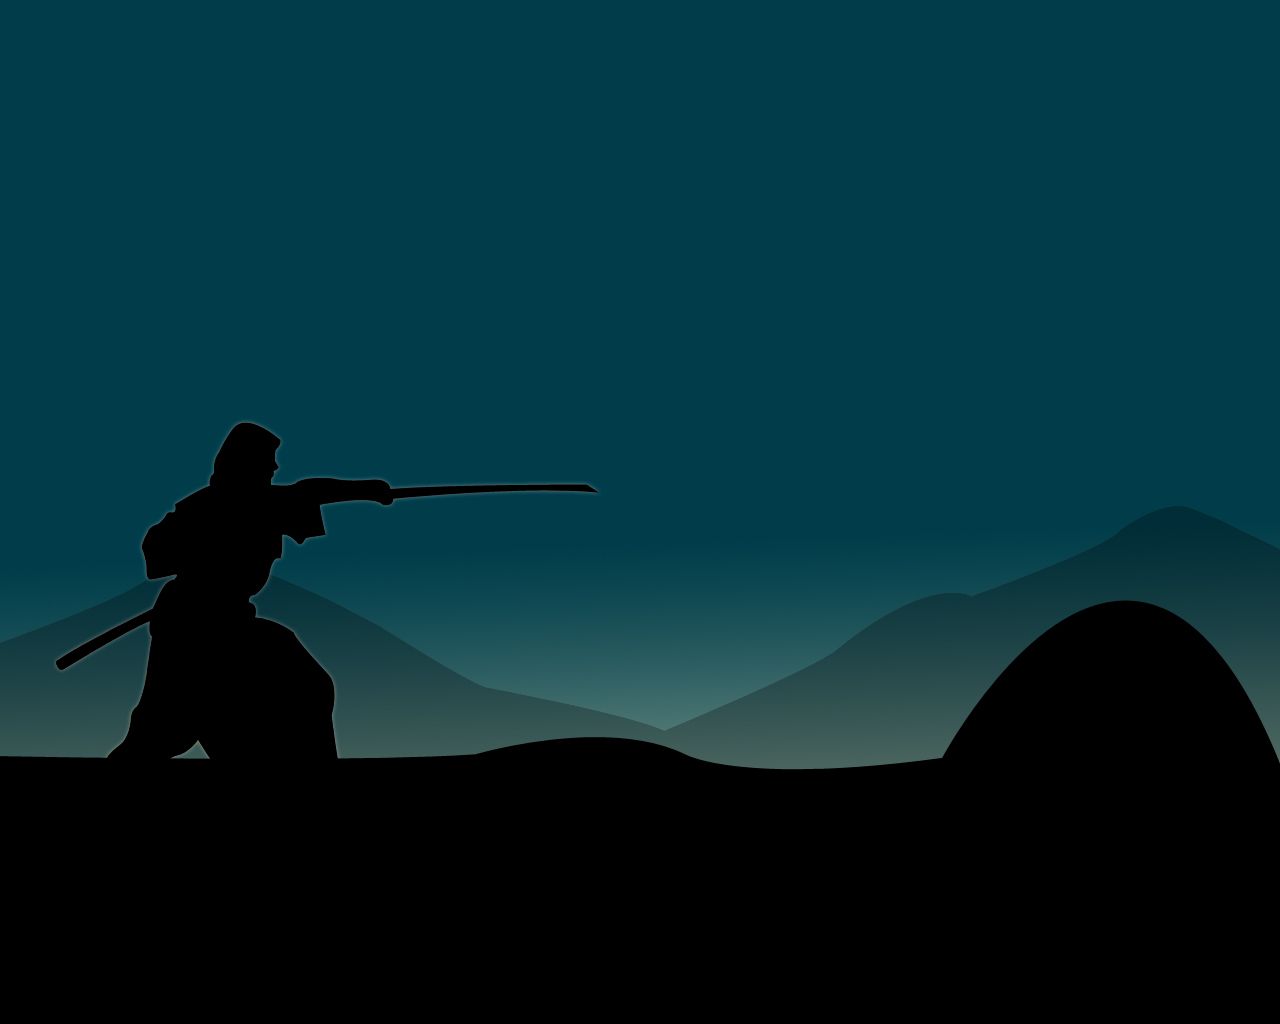 The Last Samurai- Left by Capital18 on DeviantArt